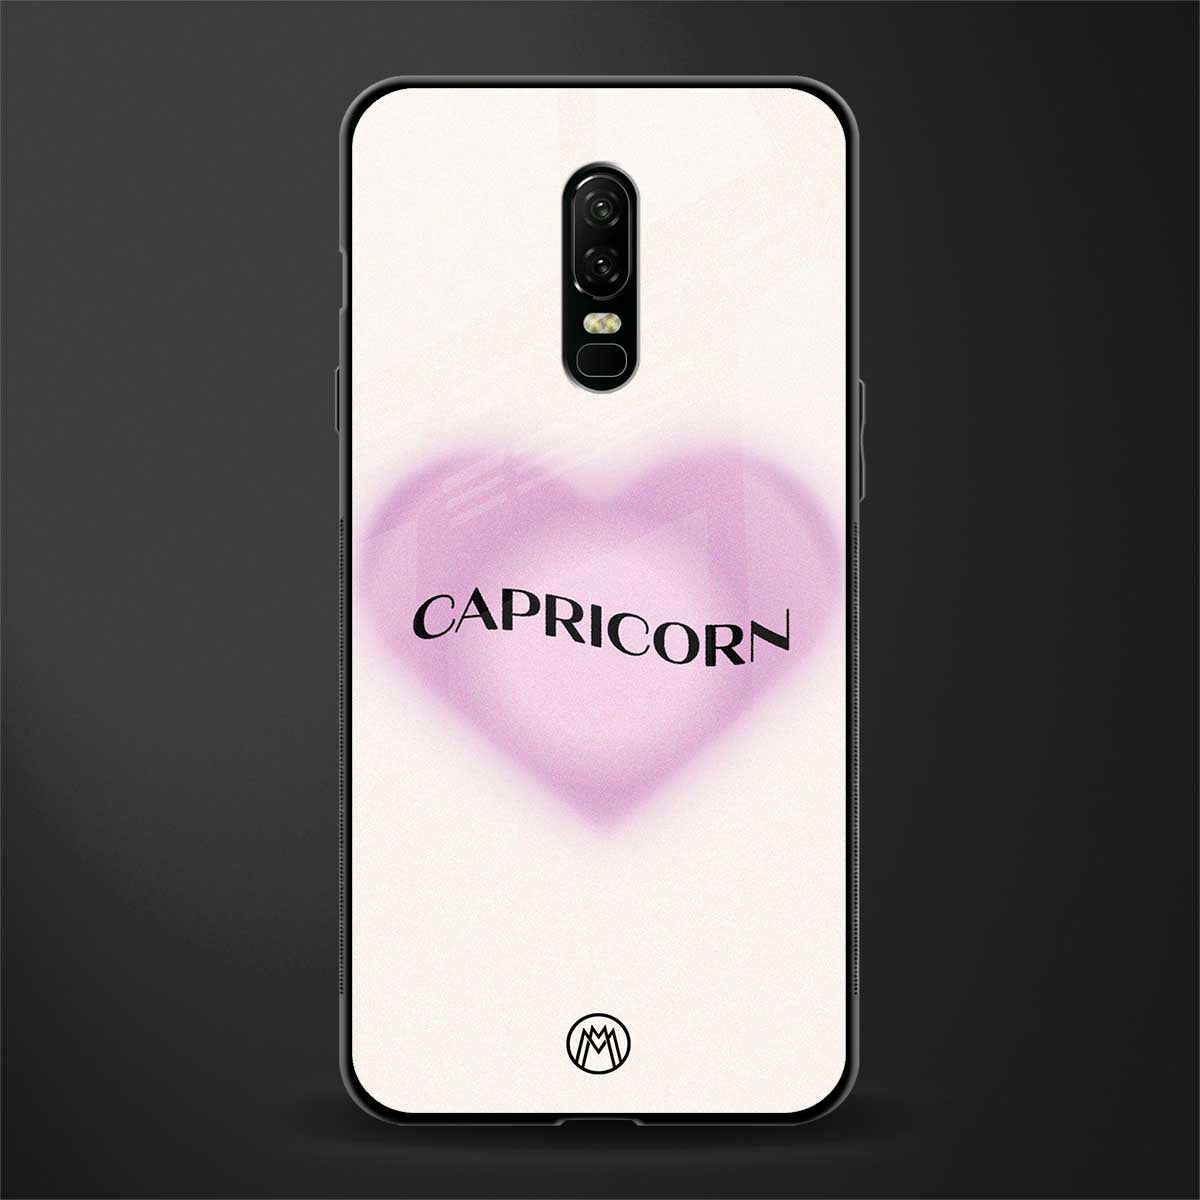 capricorn minimalistic glass case for oneplus 6 image